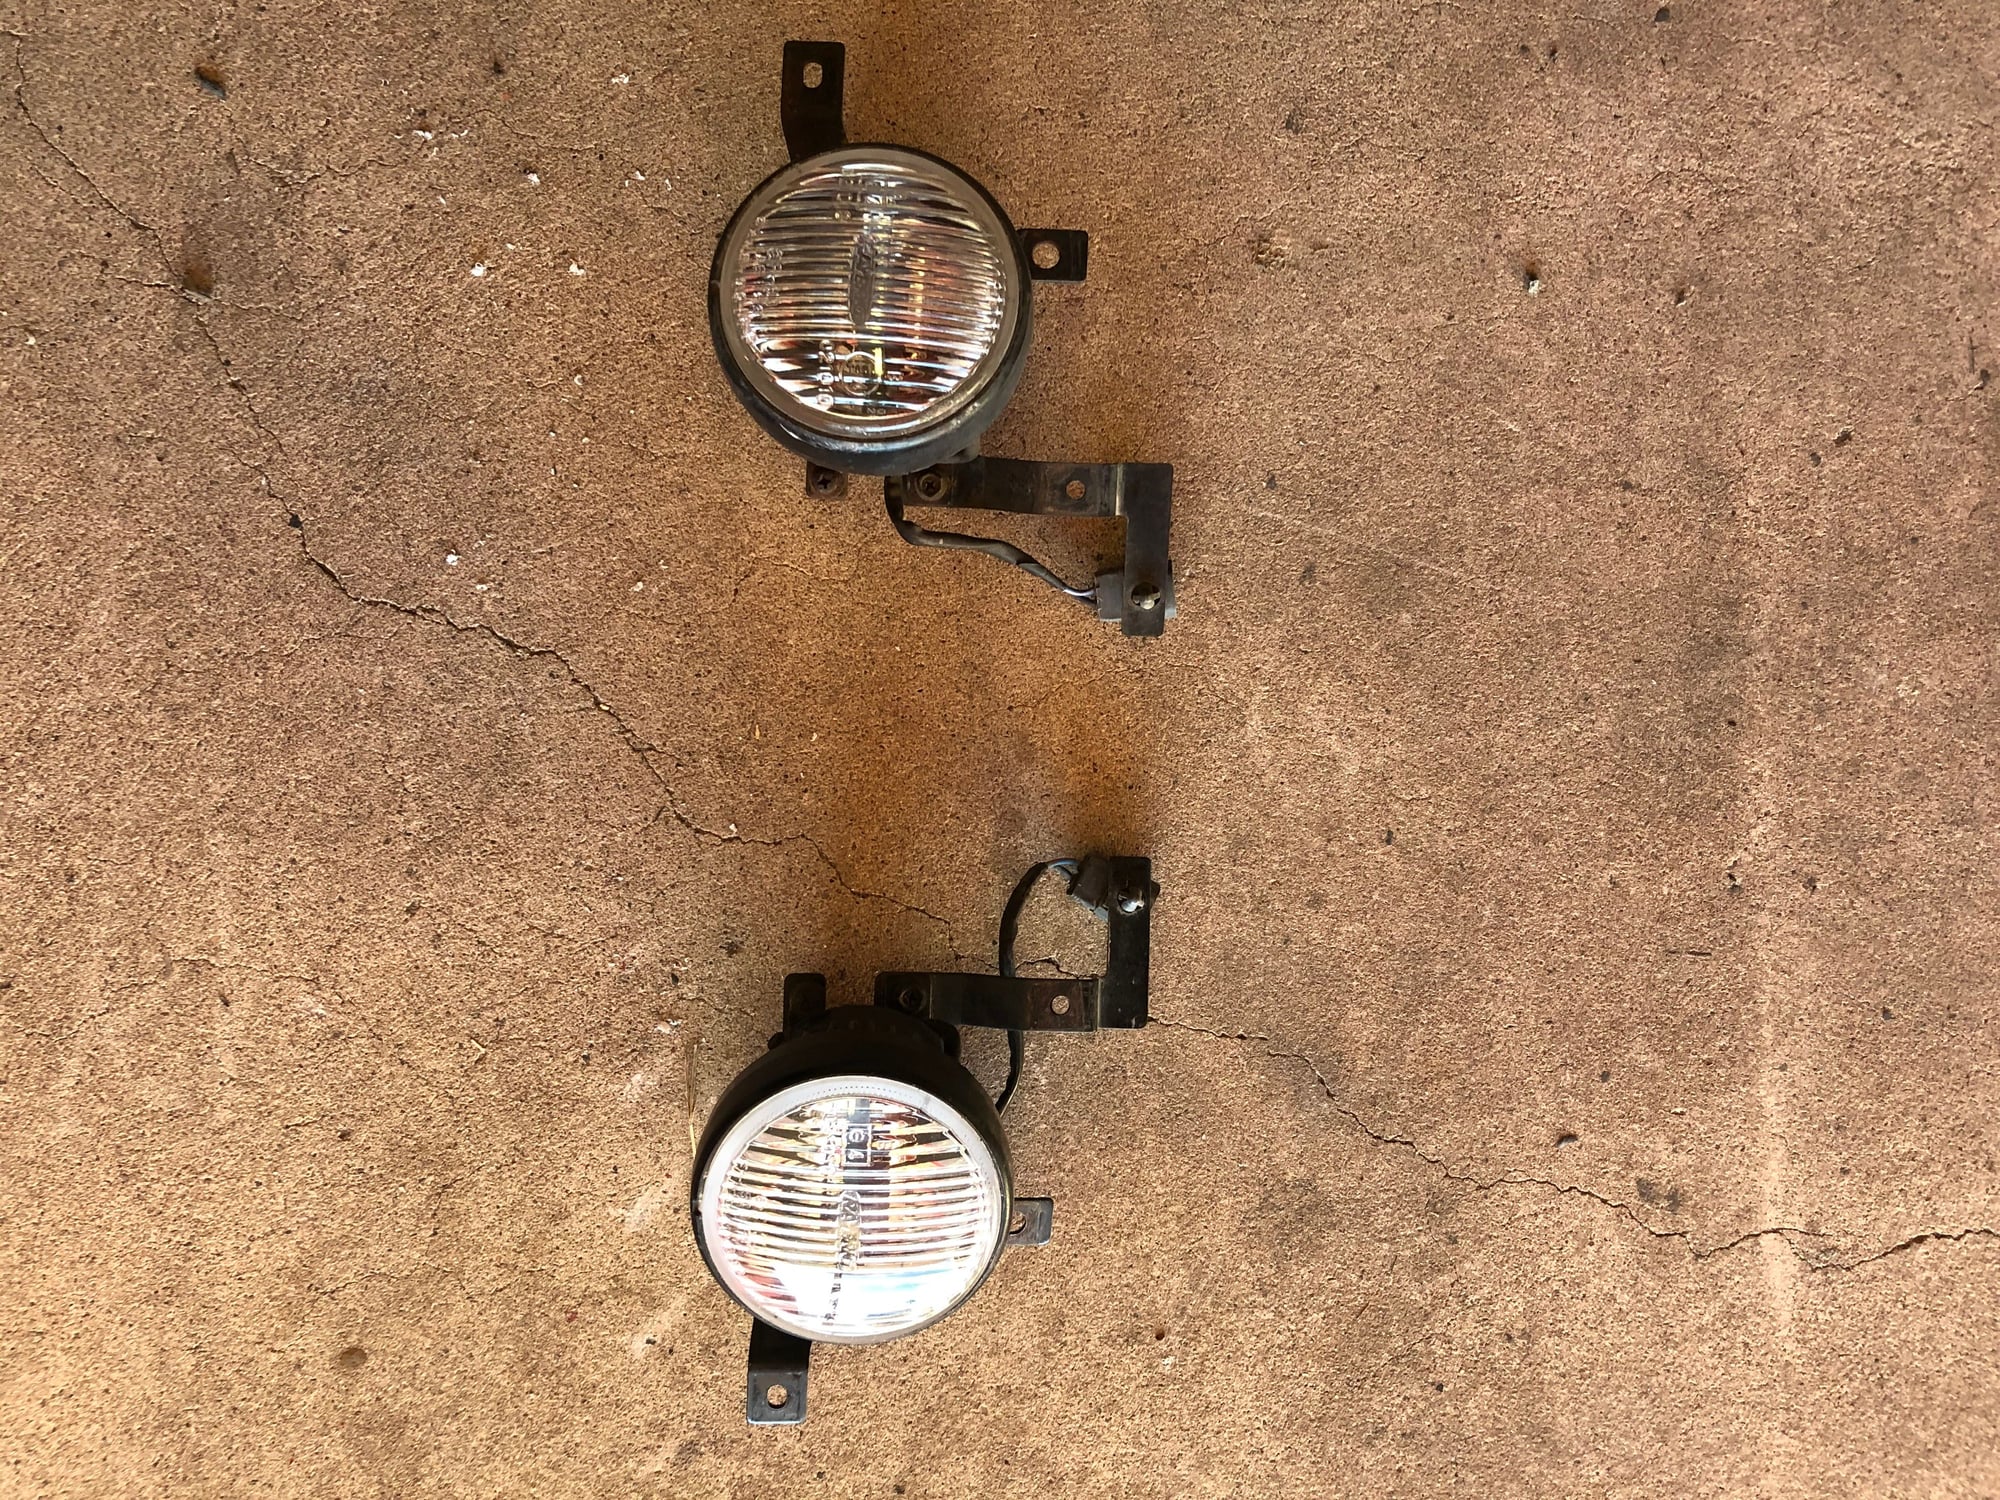 Lights - 99 spec OEM Fog lights - Used - 1993 to 2002 Mazda RX-7 - Scottsdale, AZ 85254, United States